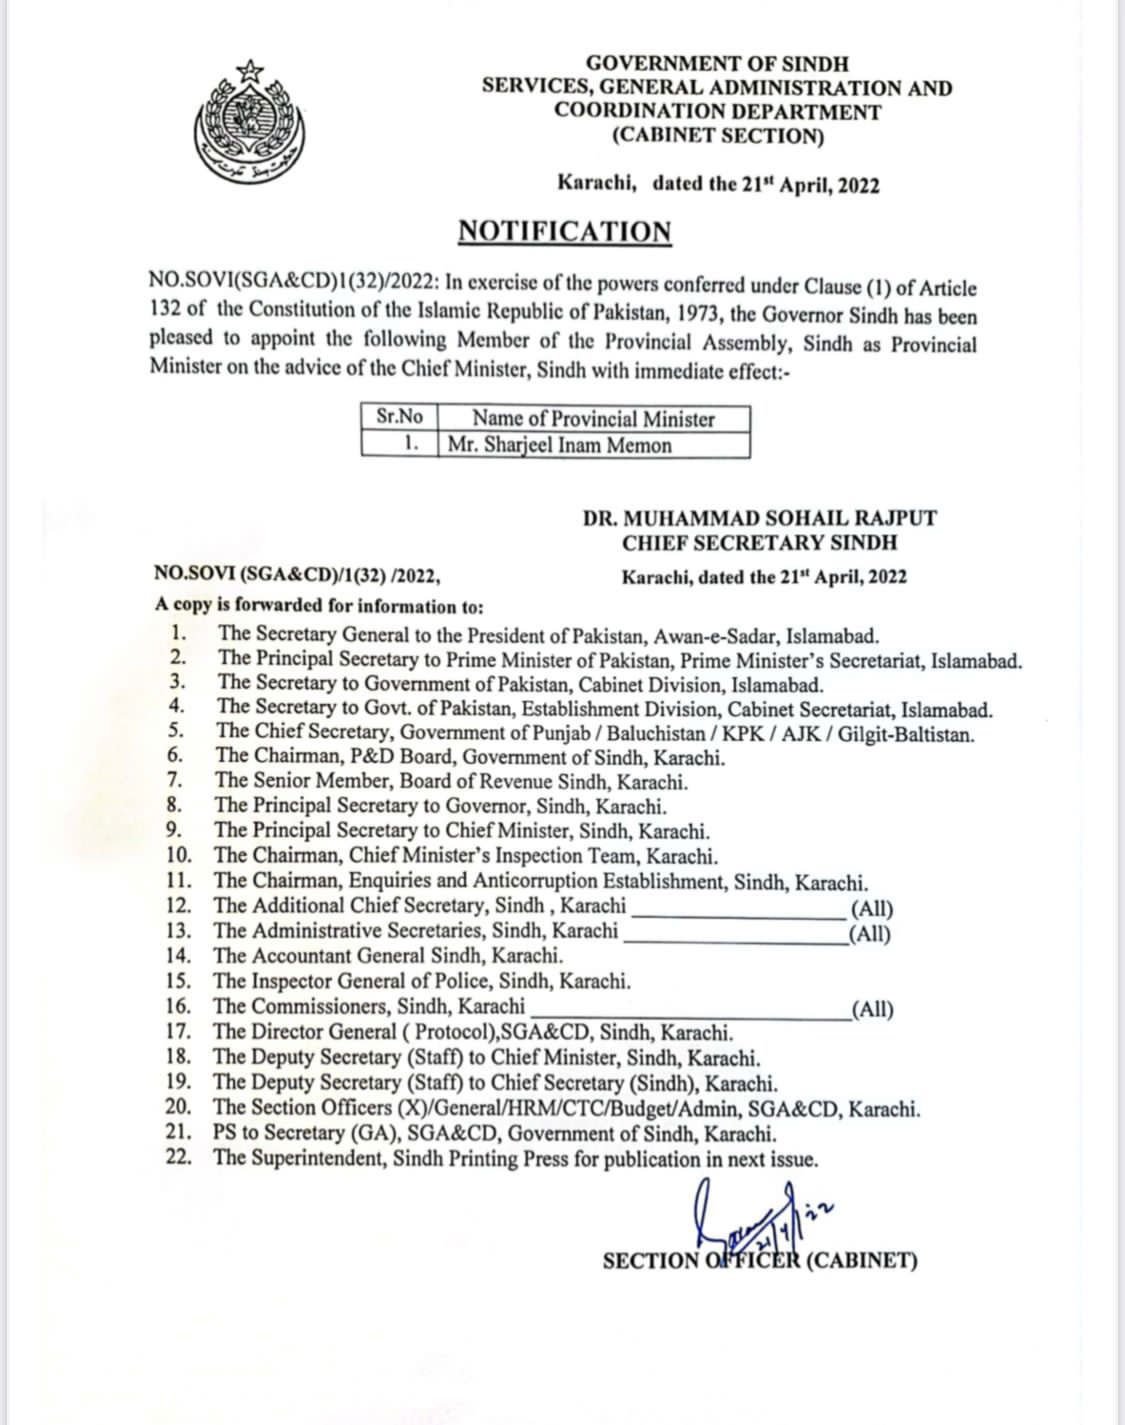 Sharjeel Memon inducted into Sindh cabinet